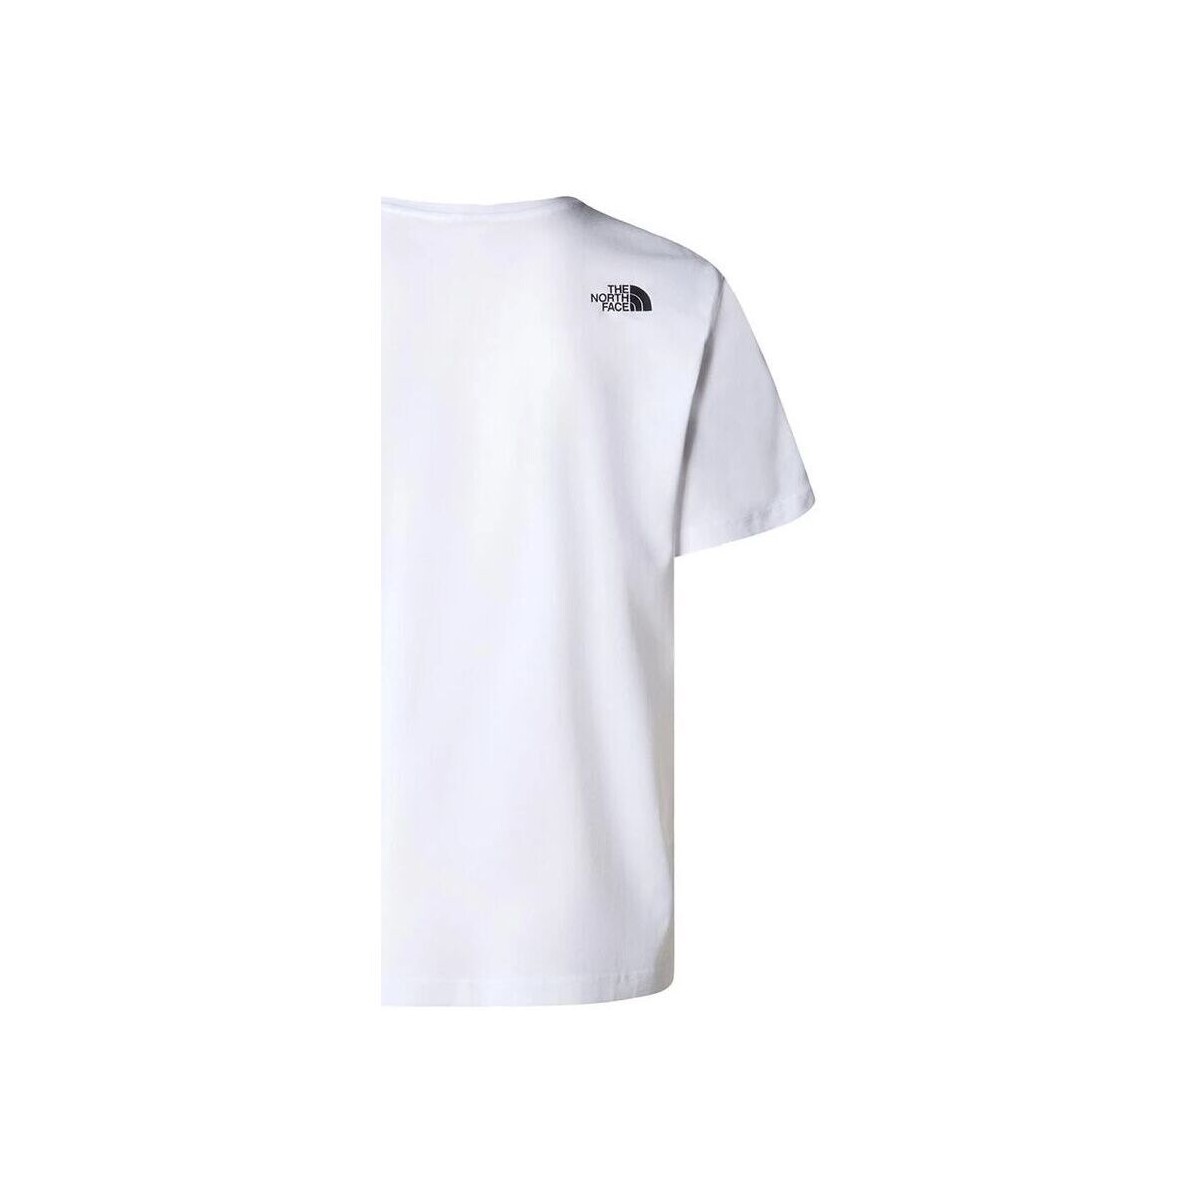 textil Camisetas manga corta The North Face Camiseta Blanca  Easy Blanco